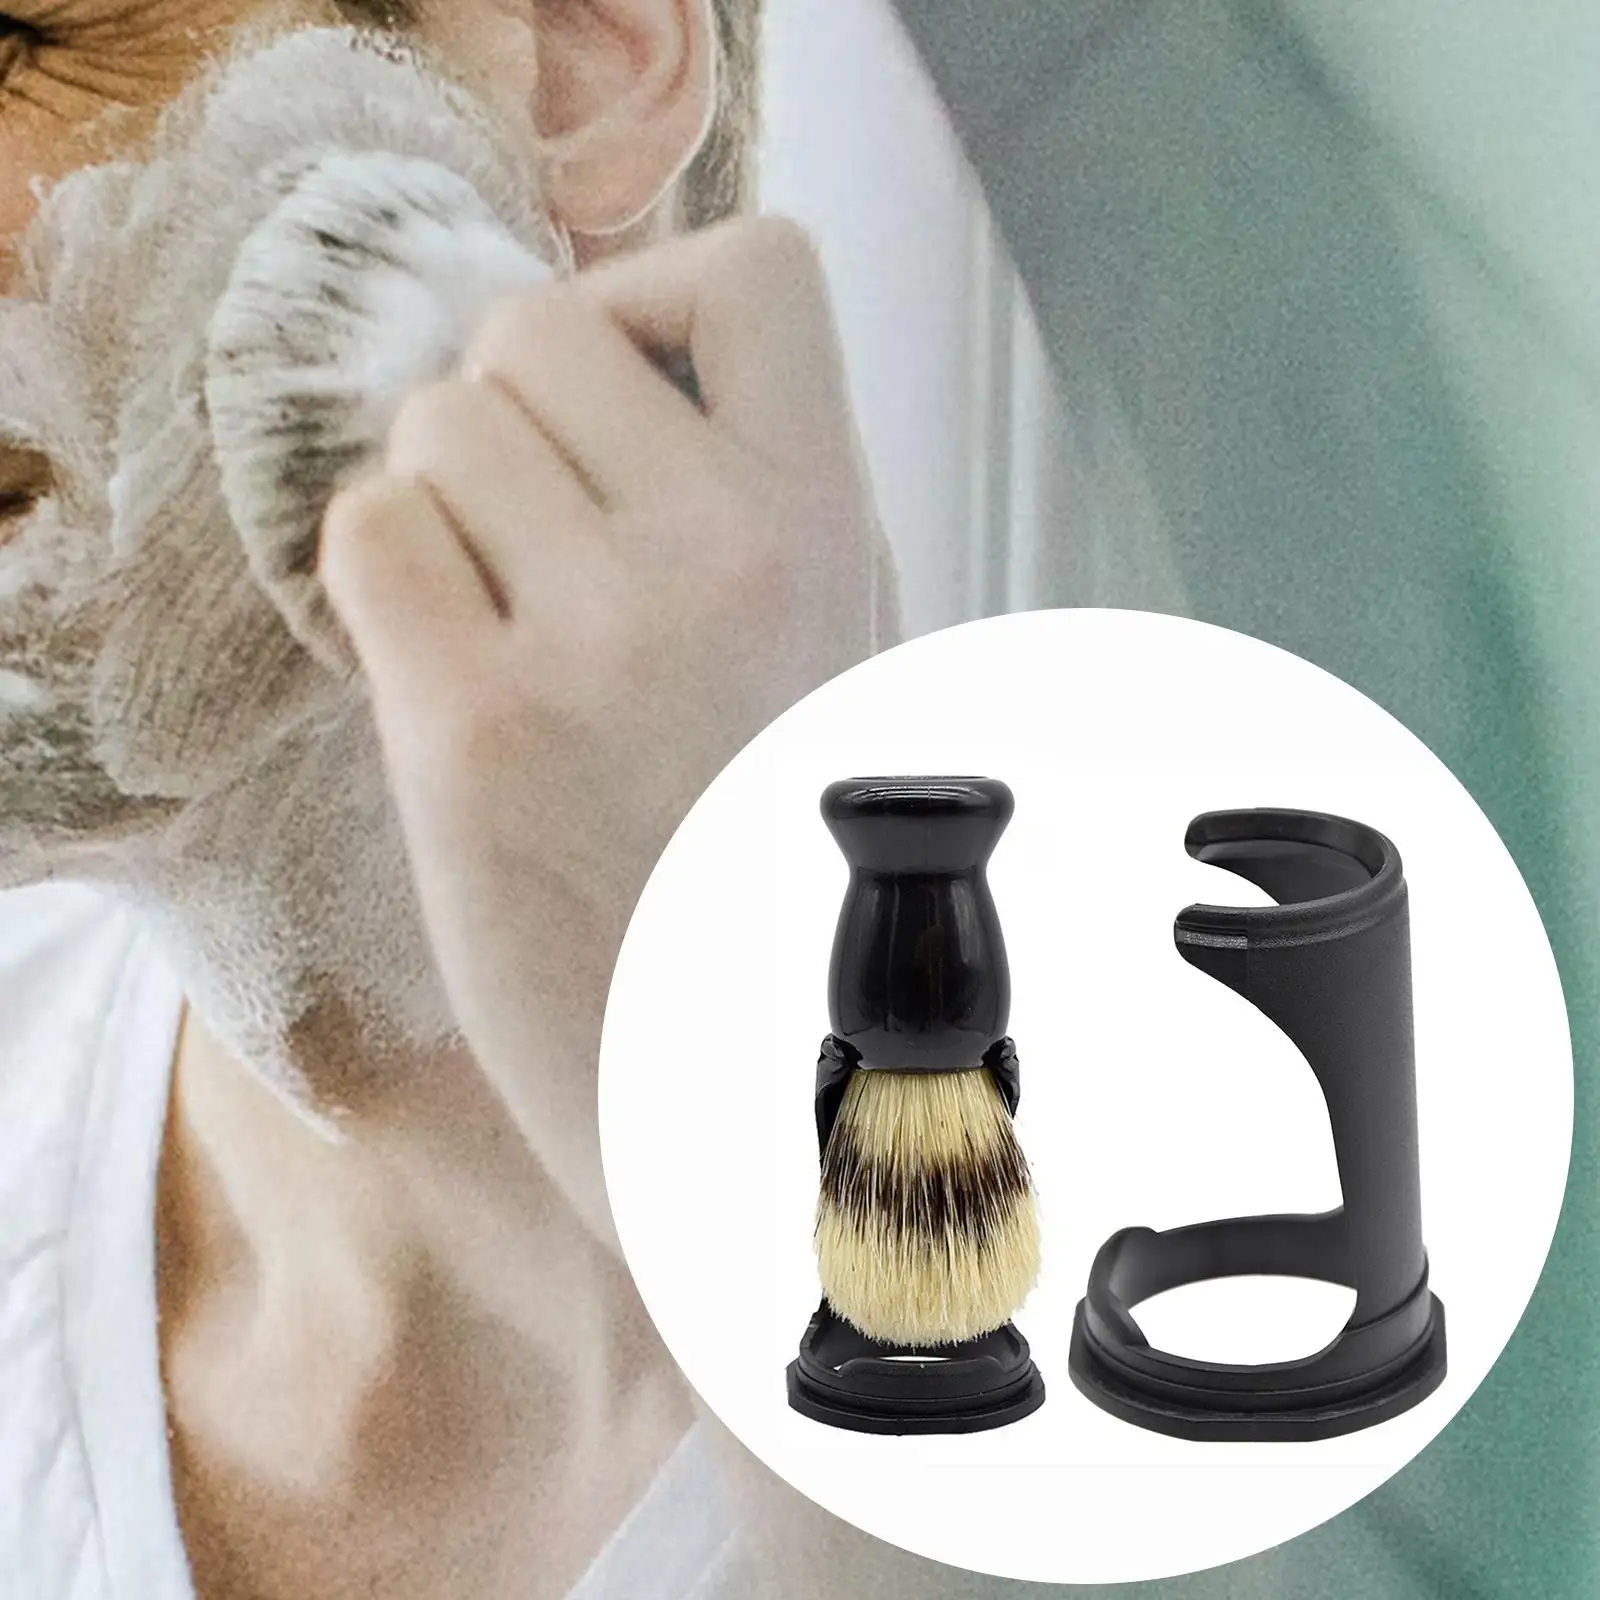 Practical Shave Brush Stand Organizer Safety Shaver Holder support Salon Bathroom Prolong skin care